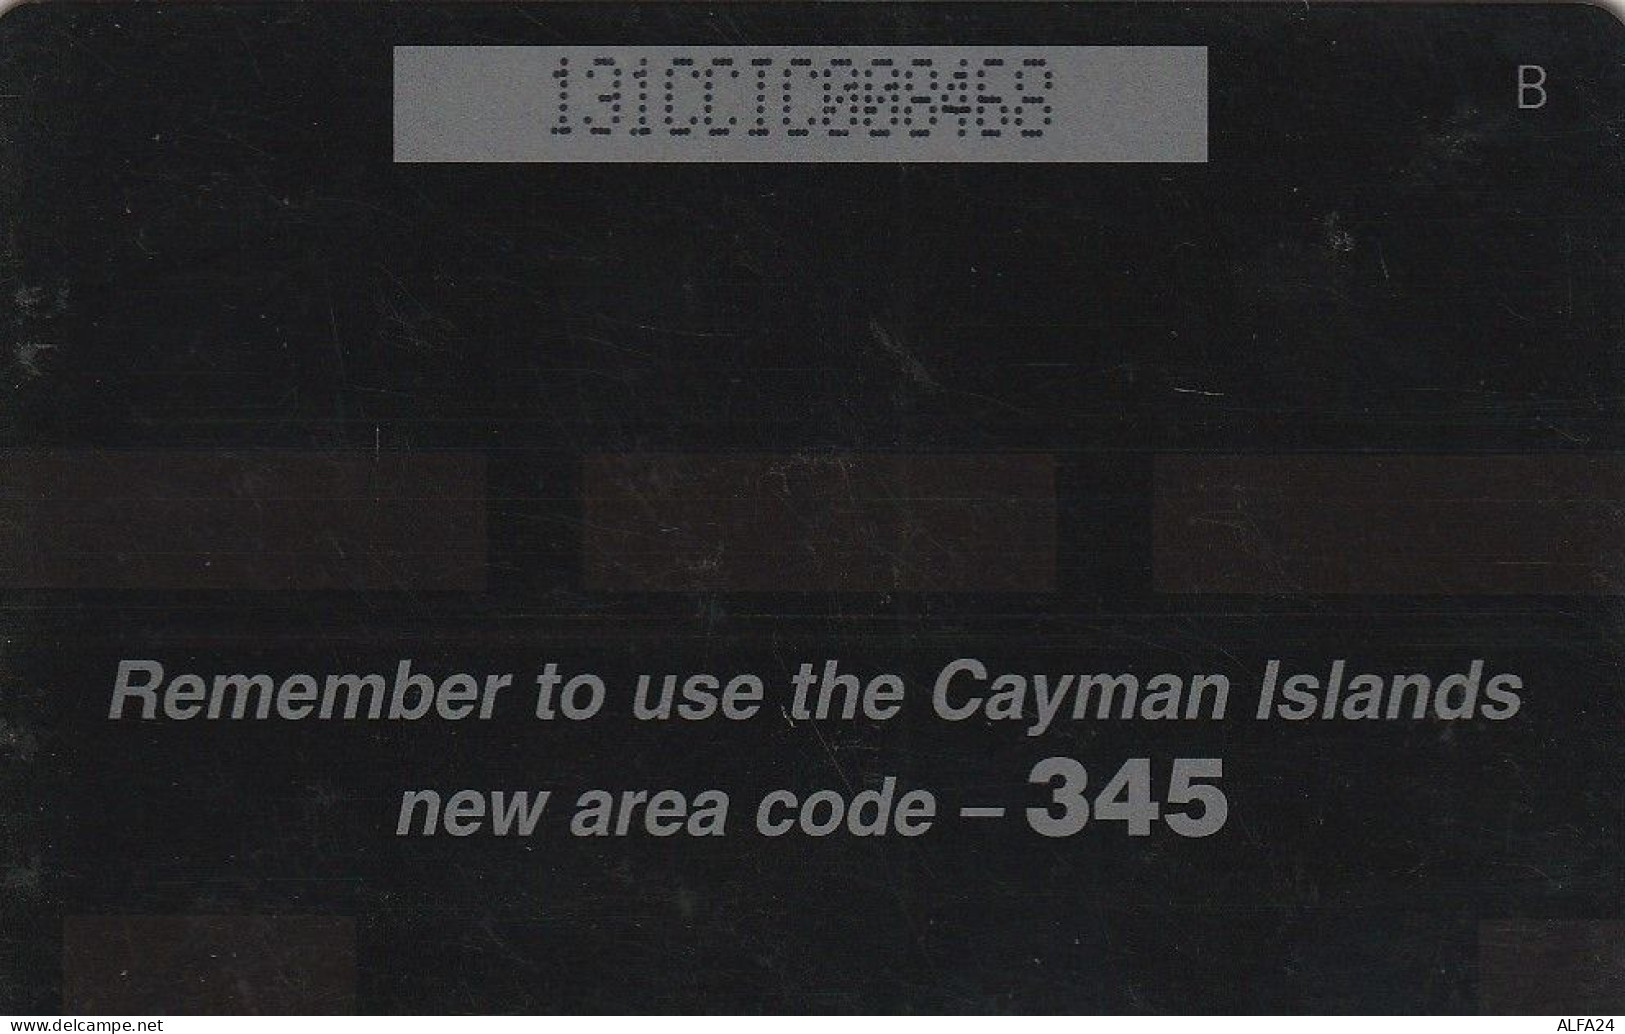 PHONE CARD CAYMAN ISLANDS  (E50.32.8 - Cayman Islands